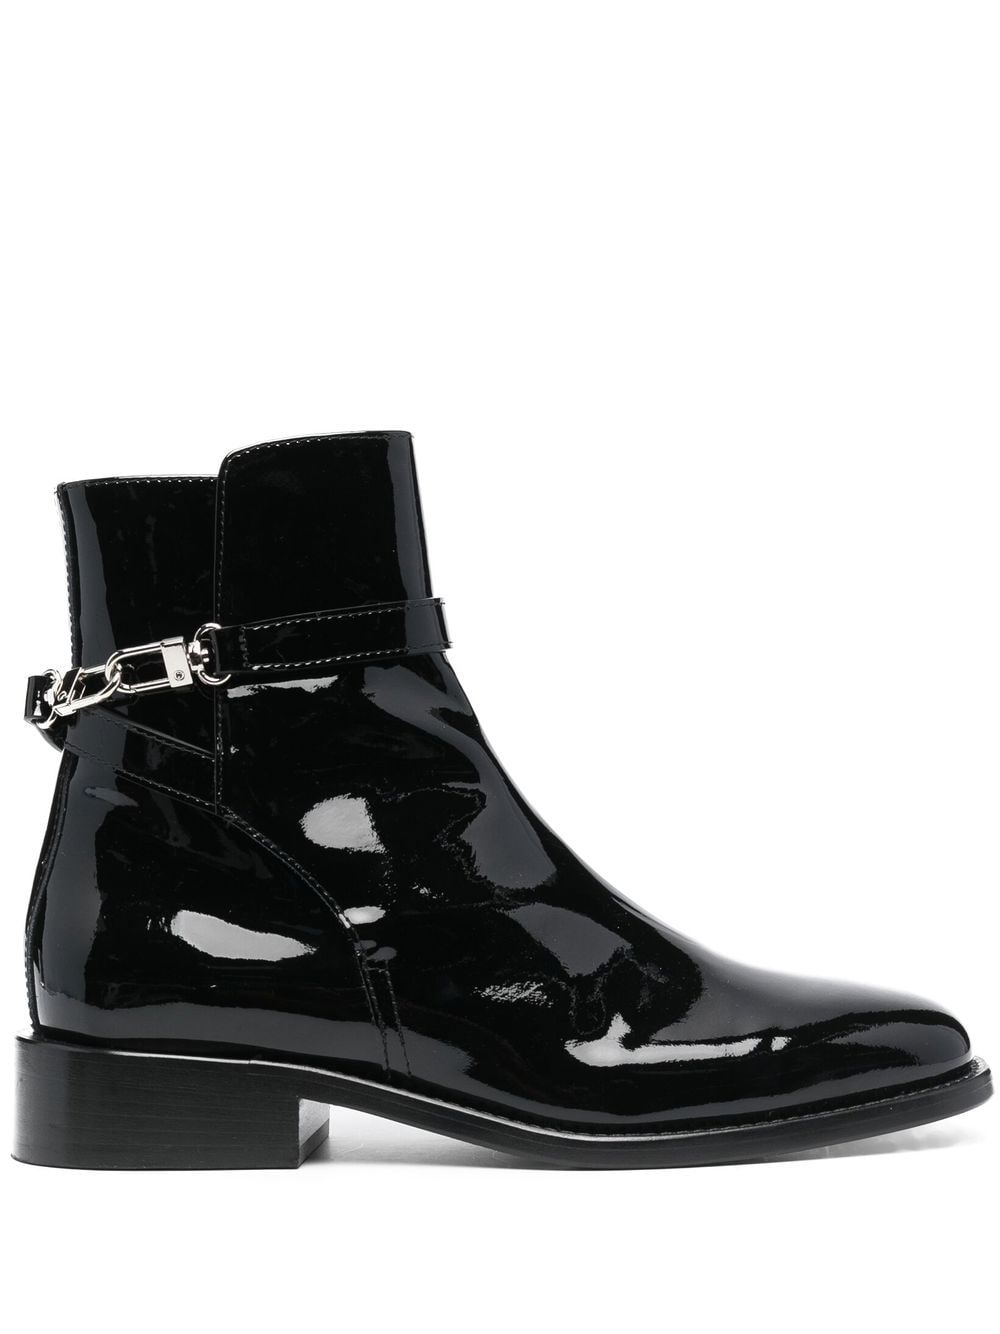 TOTEME The Jodhpur patent leather boots - Black von TOTEME